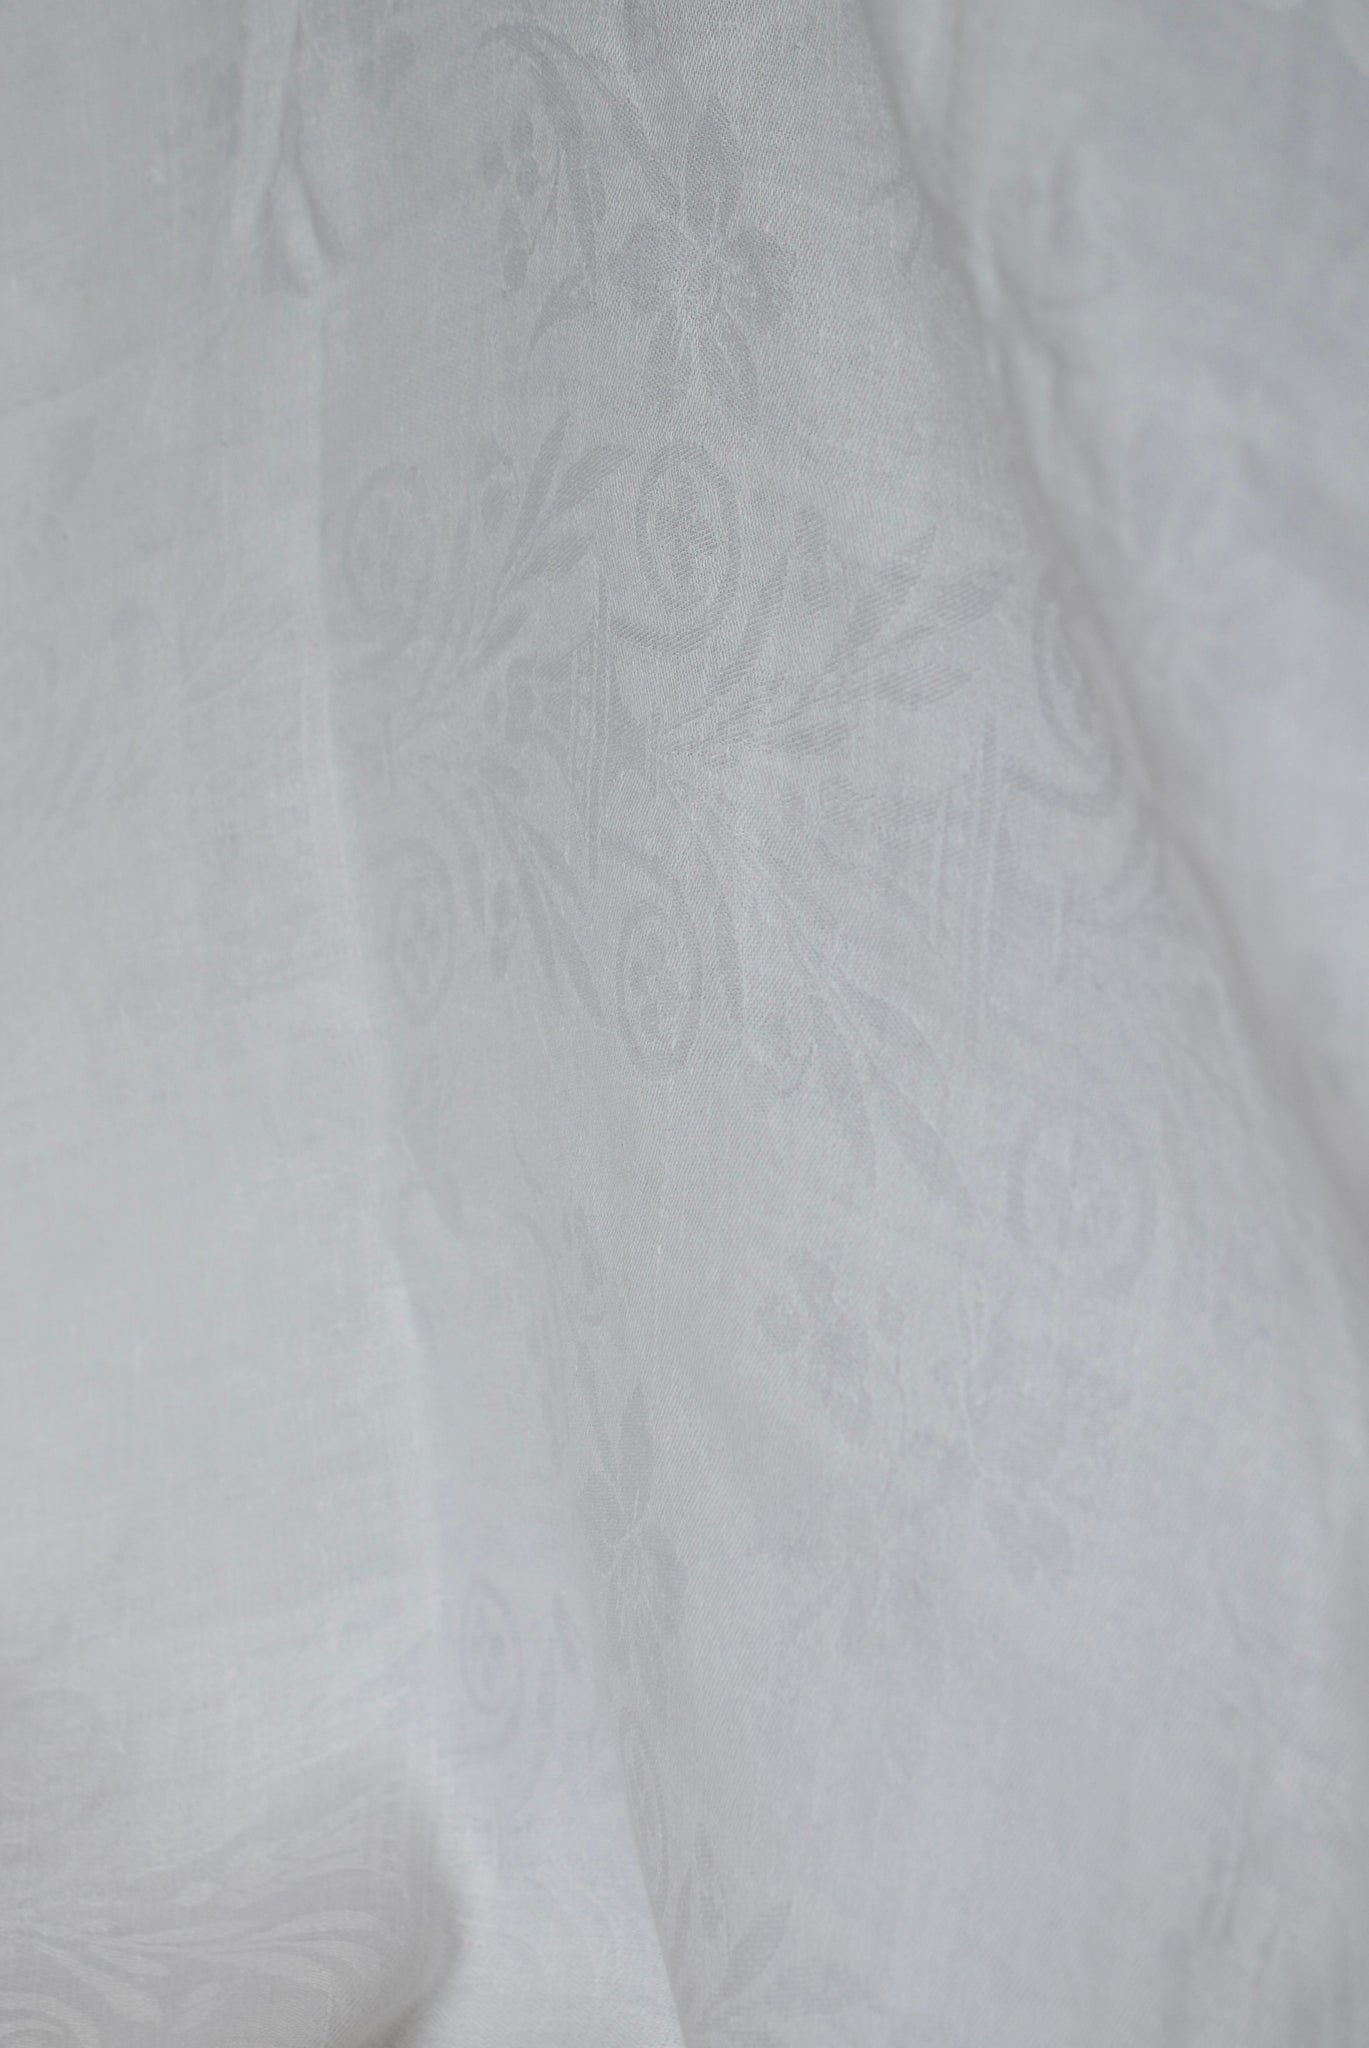 Vintage White Tablecloth